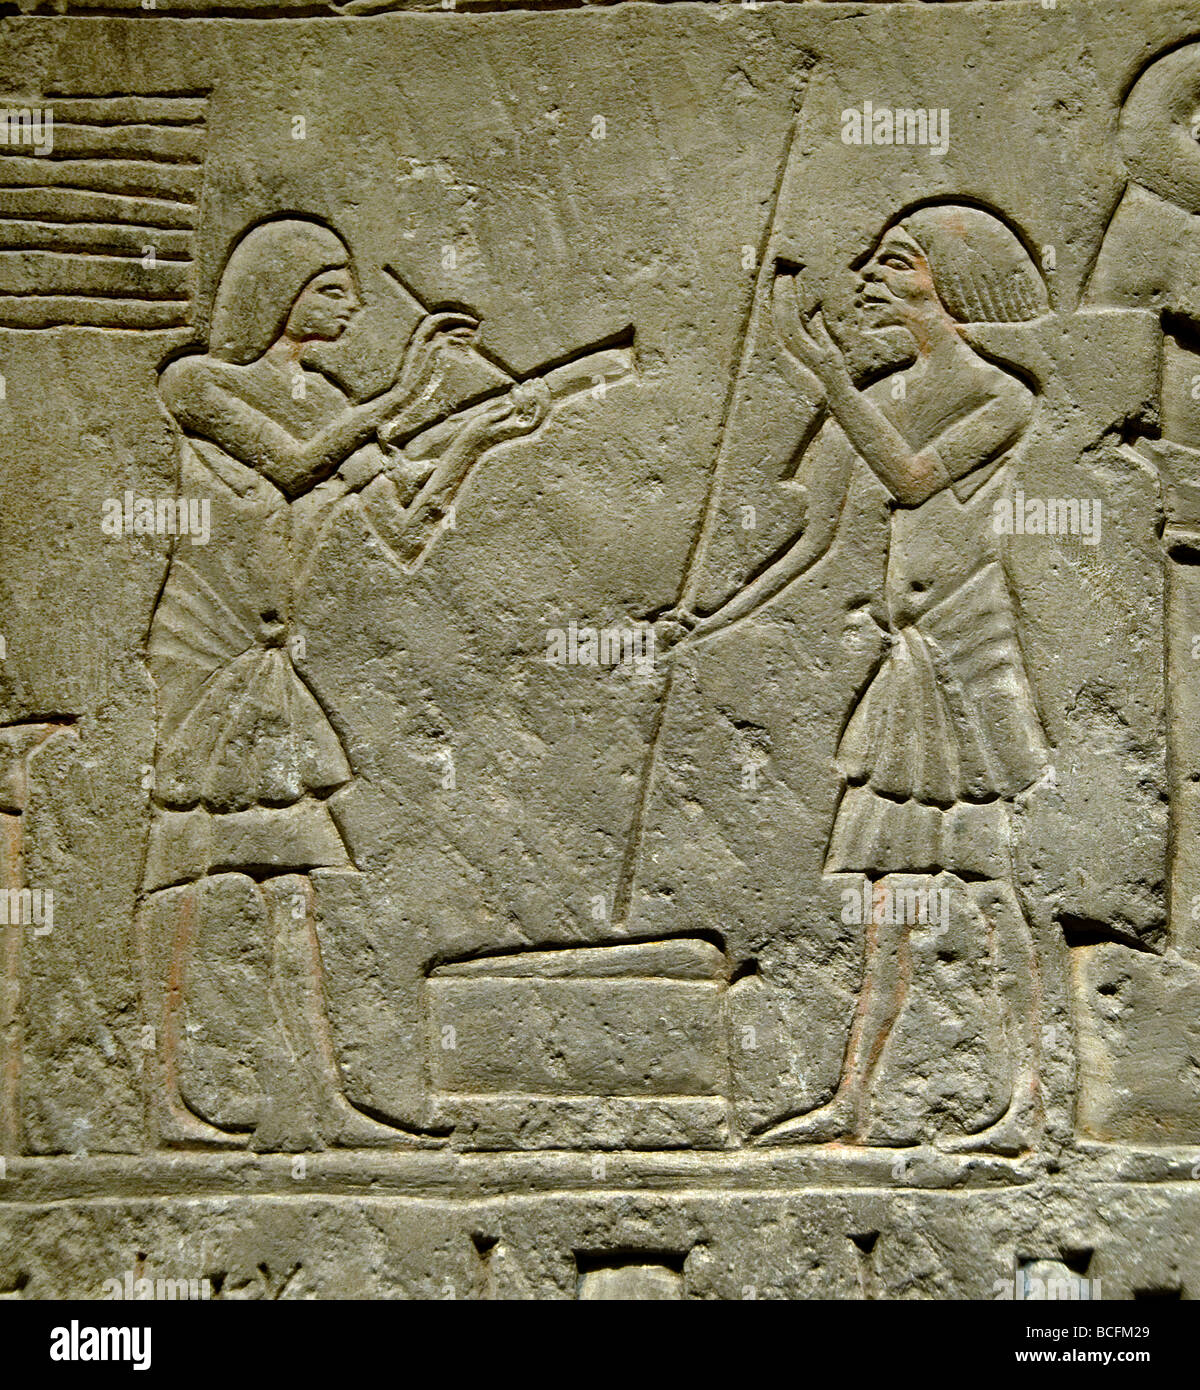 Egypt Egyptian Stone Carving 712 BC archaeology civilization Stock Photo